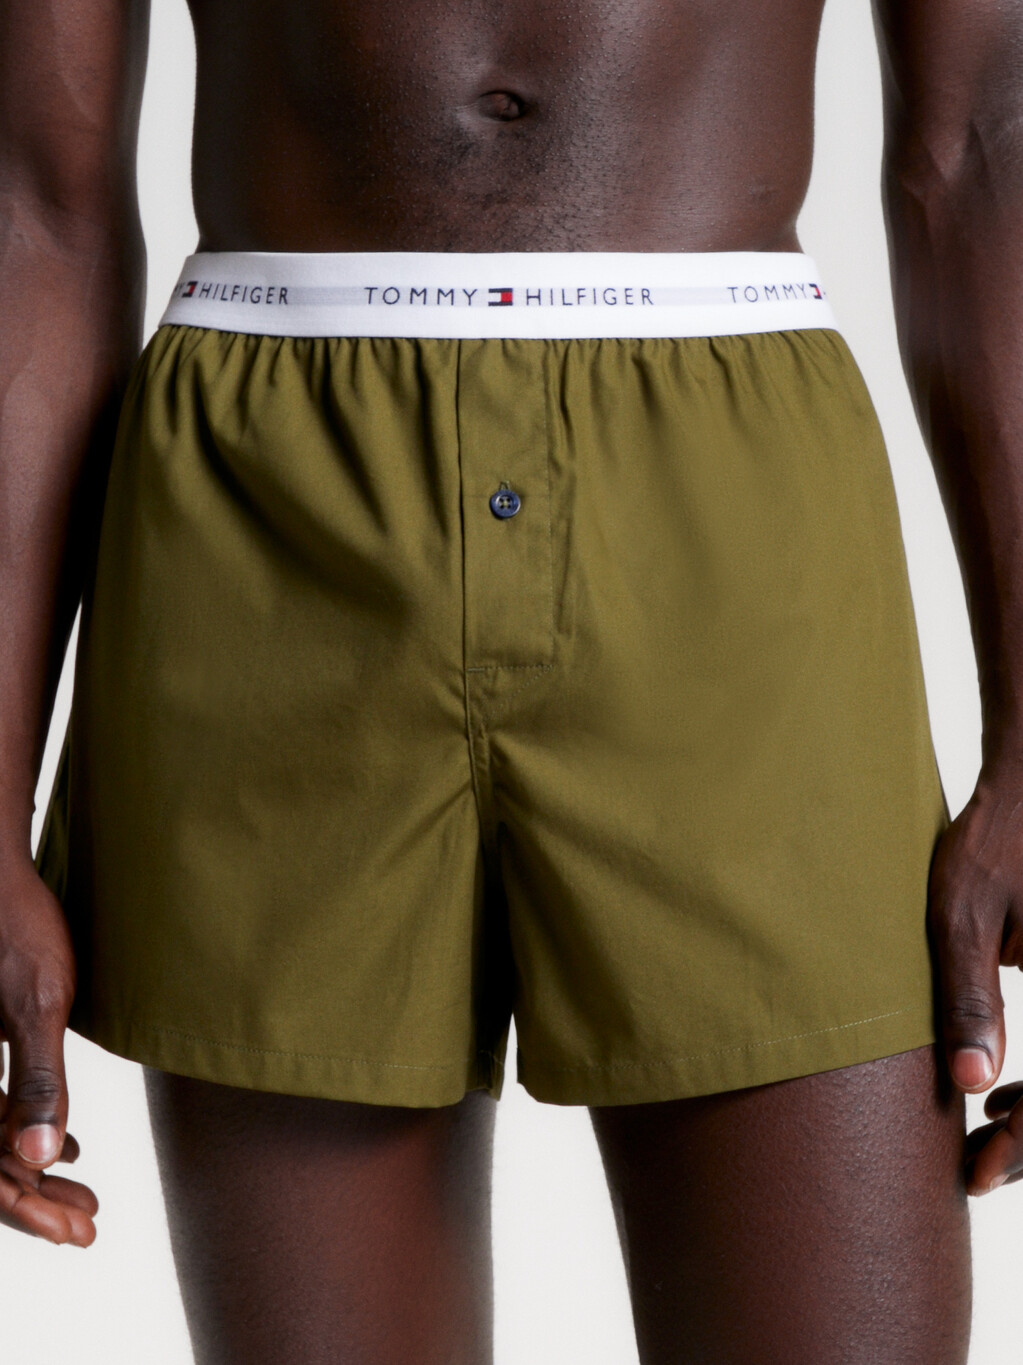 3-Pack Essential Signature Boxer Shorts, Dsrt Sky/ Dp Indigo/ Putting Green, hi-res